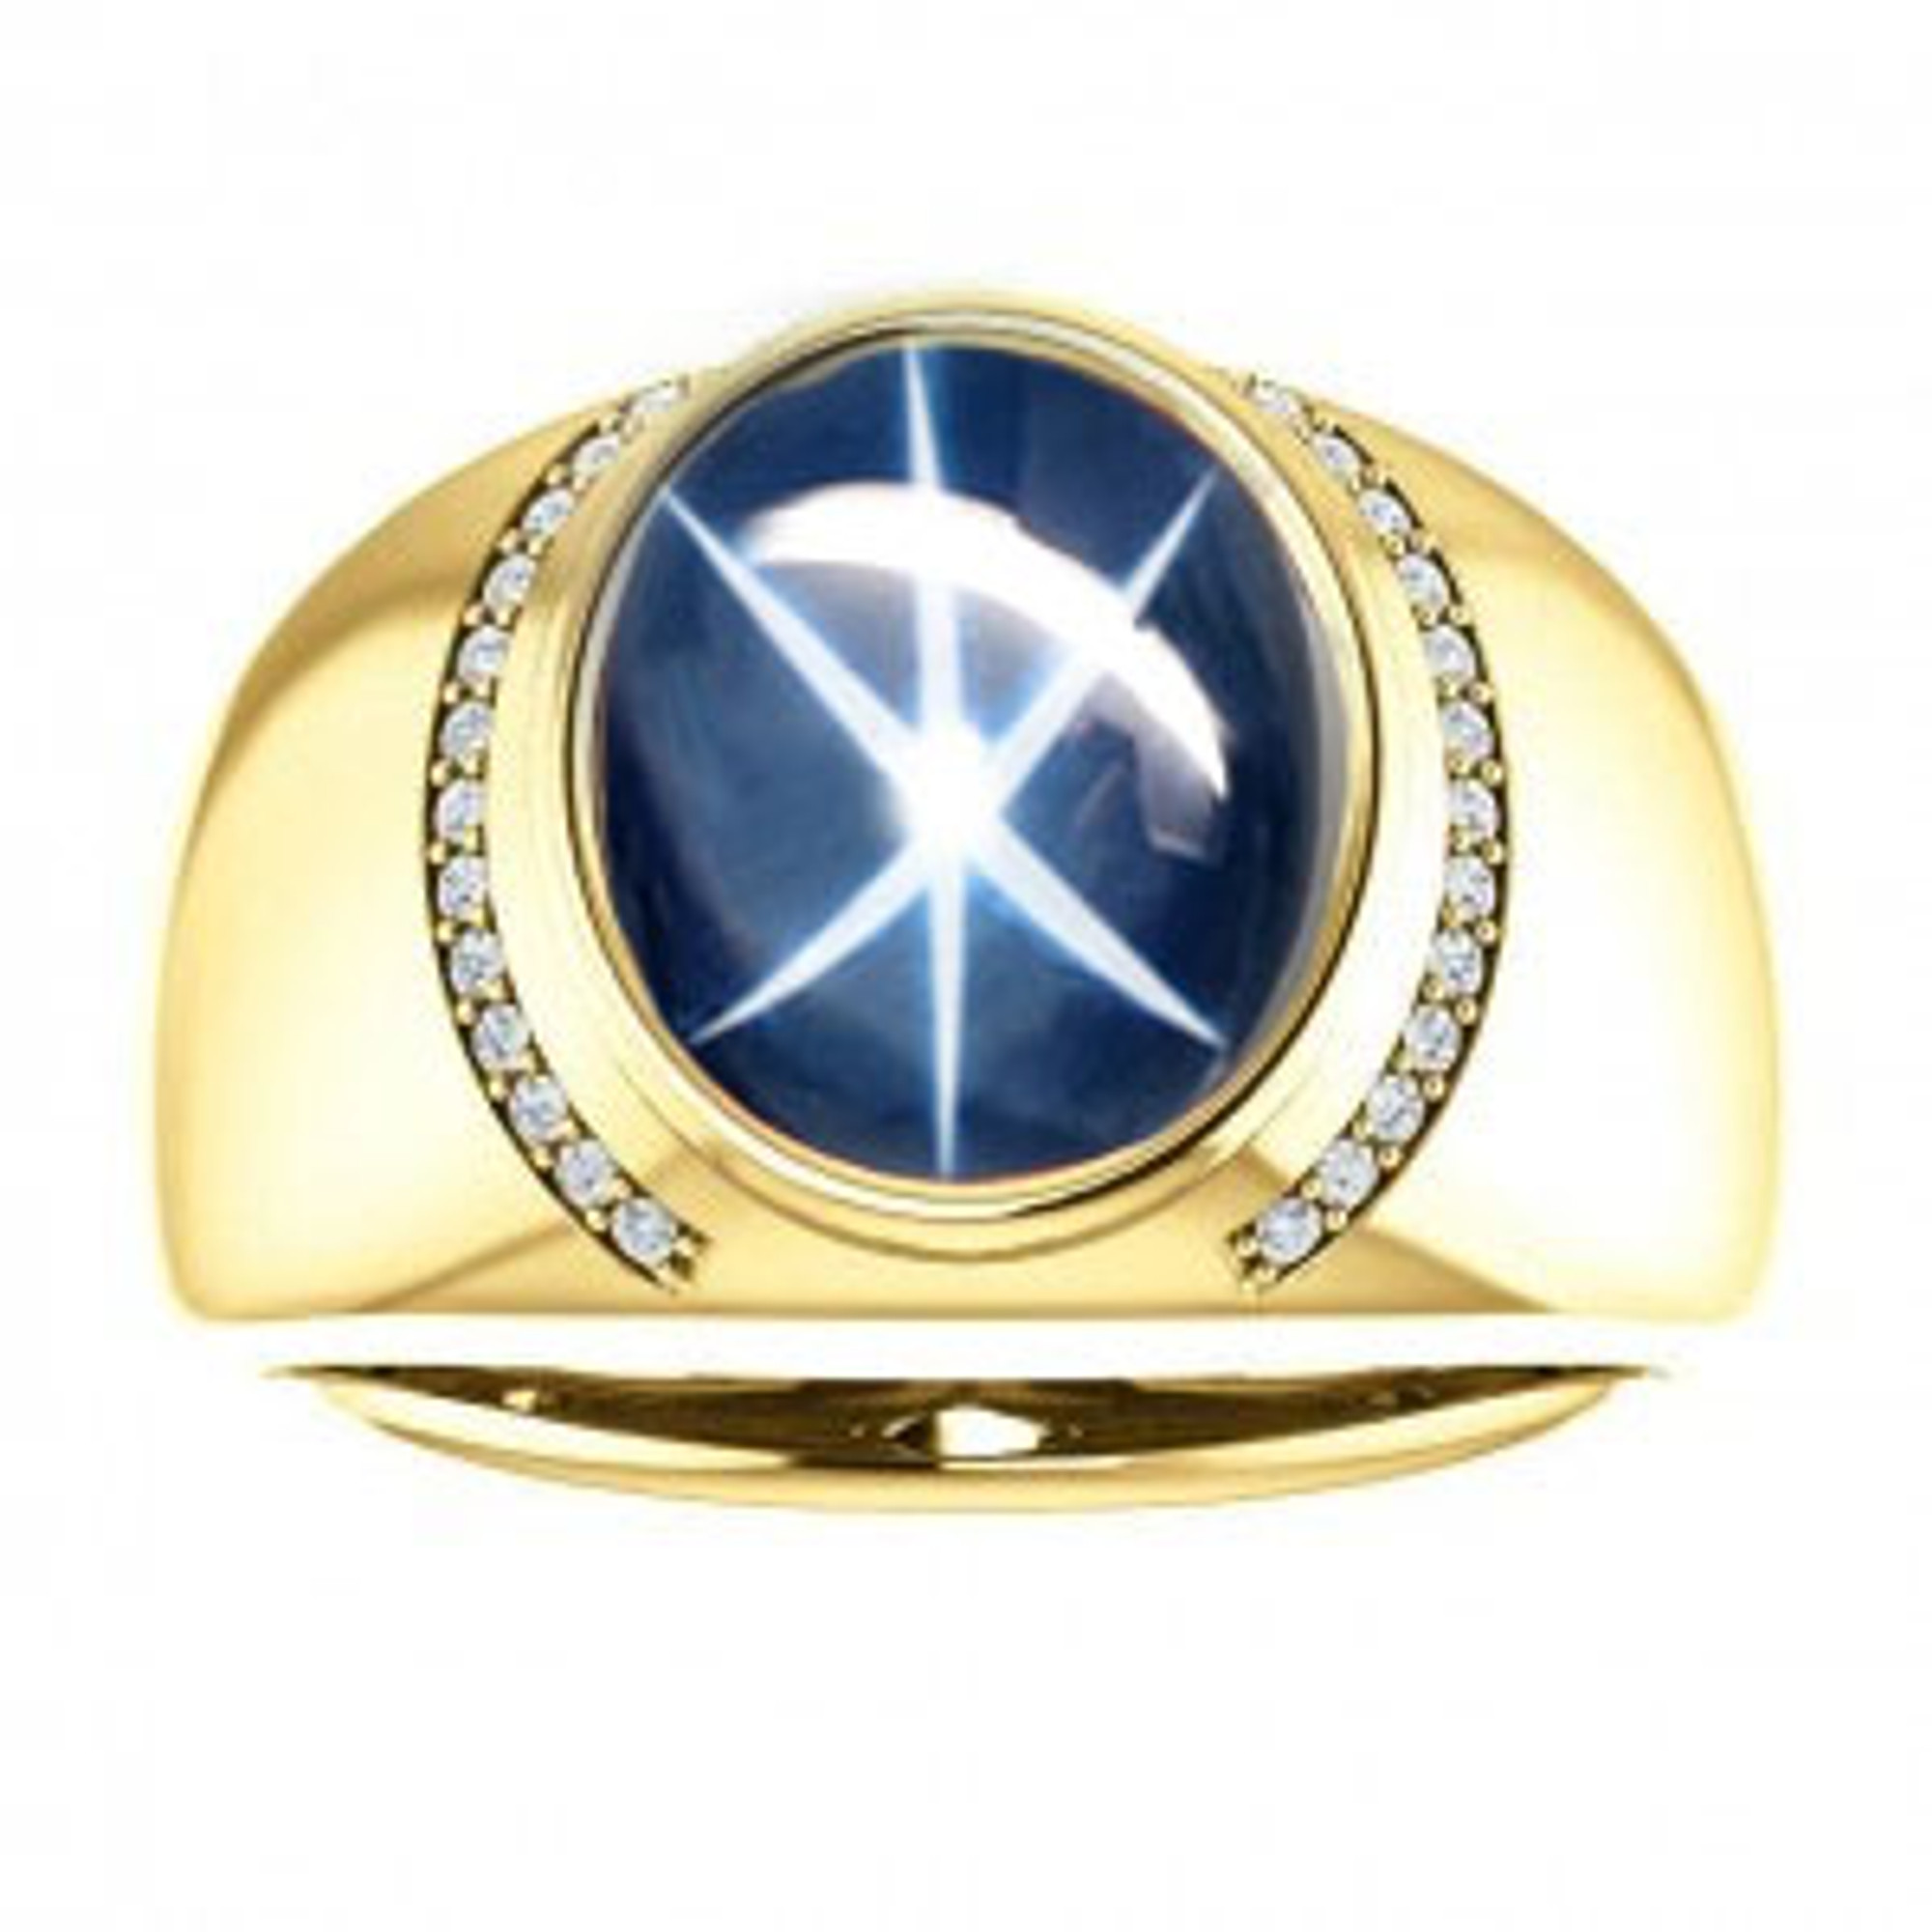 Buy Blue Star Sapphire Ring 14k White Gold Online in India - Etsy